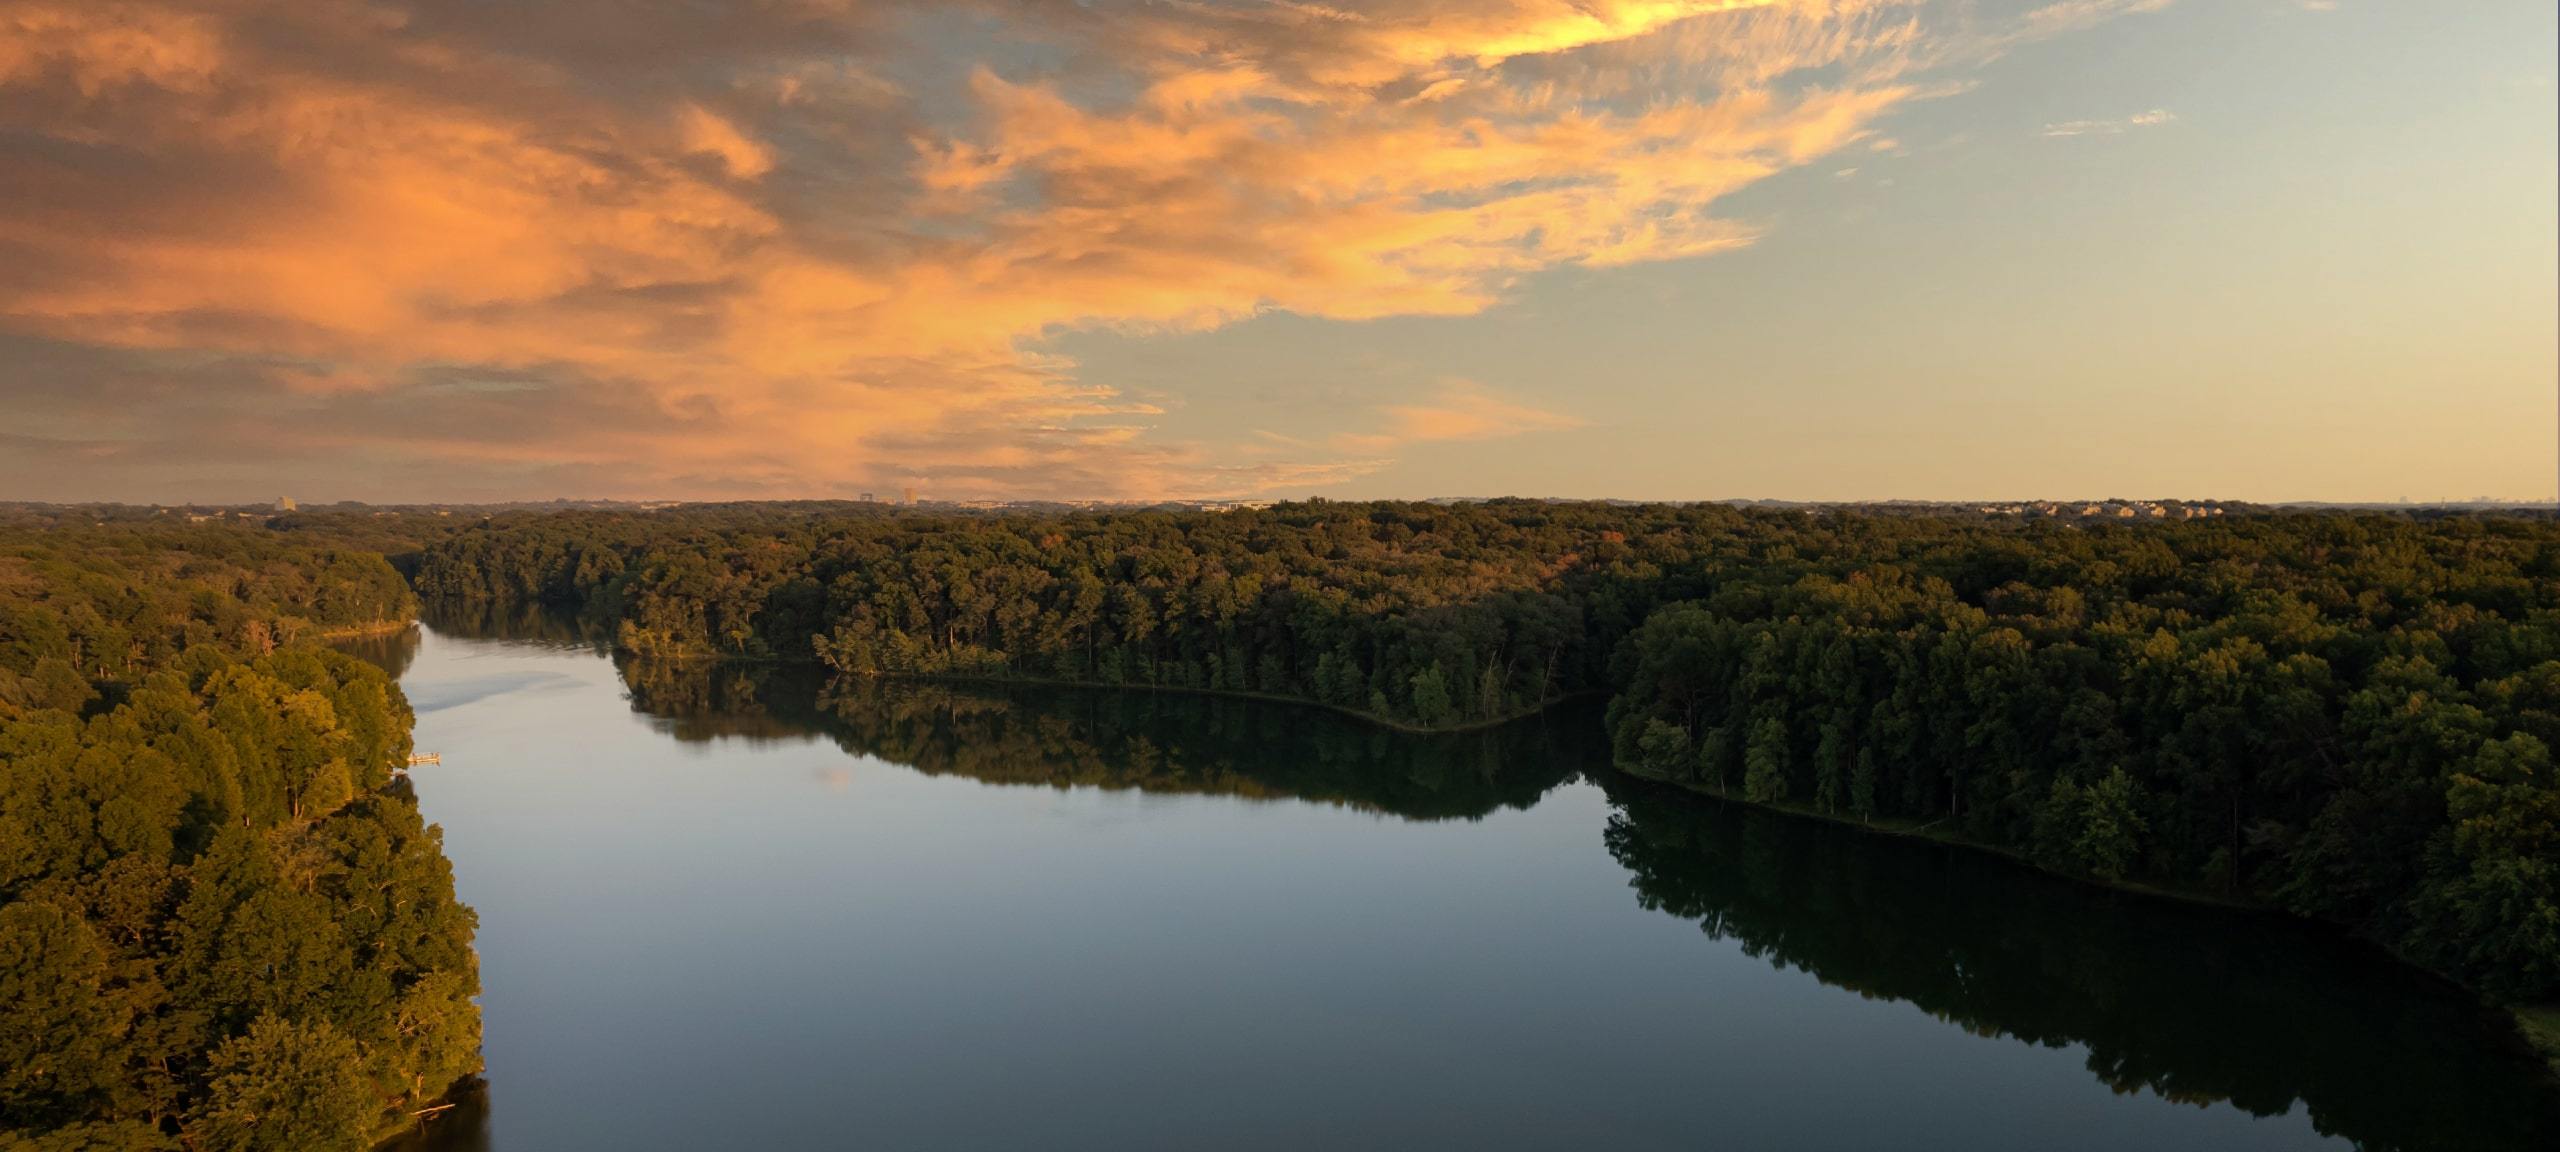 Sunset over Seneca State Creek Park in Gaithersburg, MD